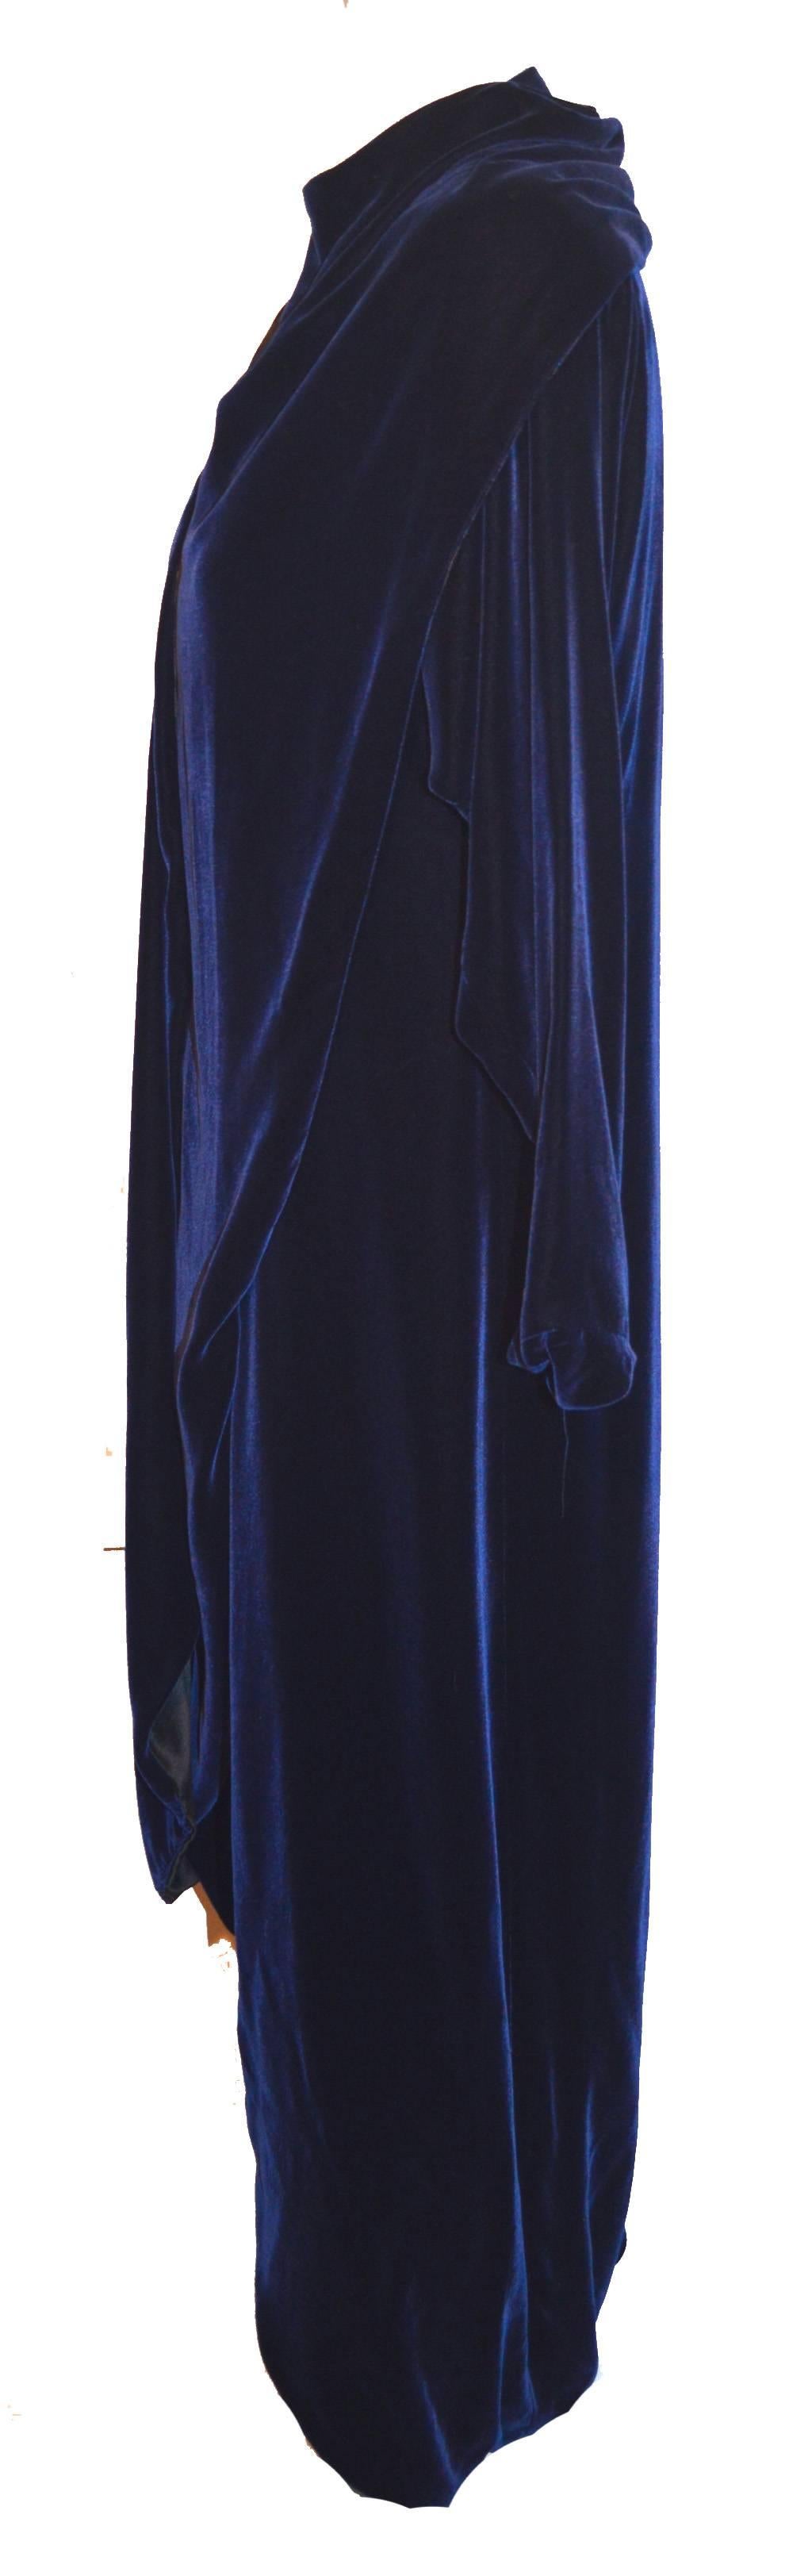 Halston 1970s Navy Blue Velvet Wrap Dress Cloak Size 10 1